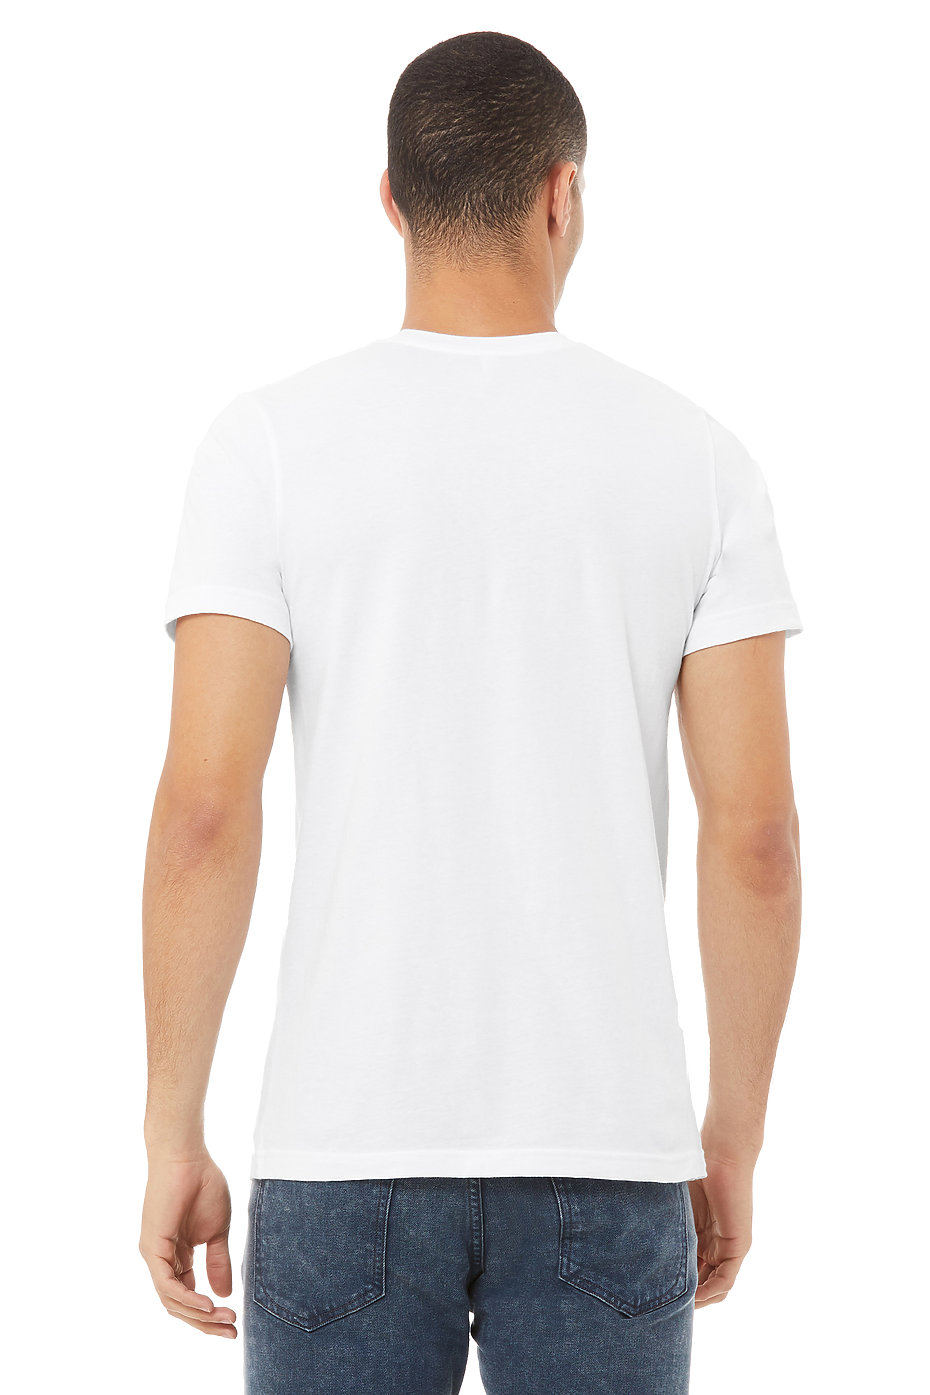 Jersey T Shirts | Mens Wholesale Clothing | Bulk, Plain Blank T Shirts ...